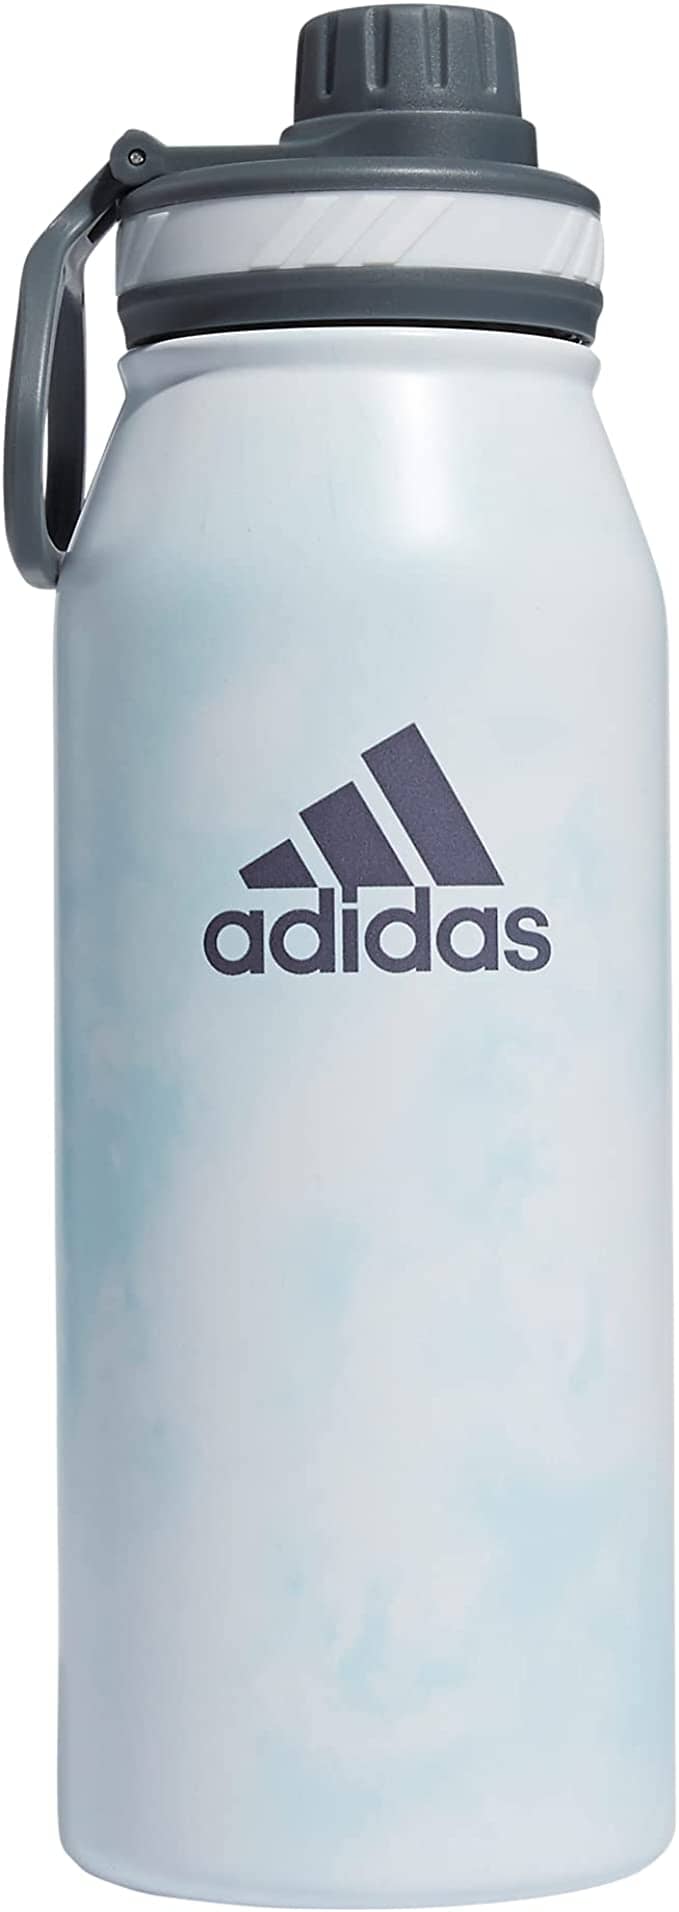 adidas Steel 1L Metal Bottle Water Bottles Adidas OSFA Stone Wash/Blue White/Onix Grey/White 